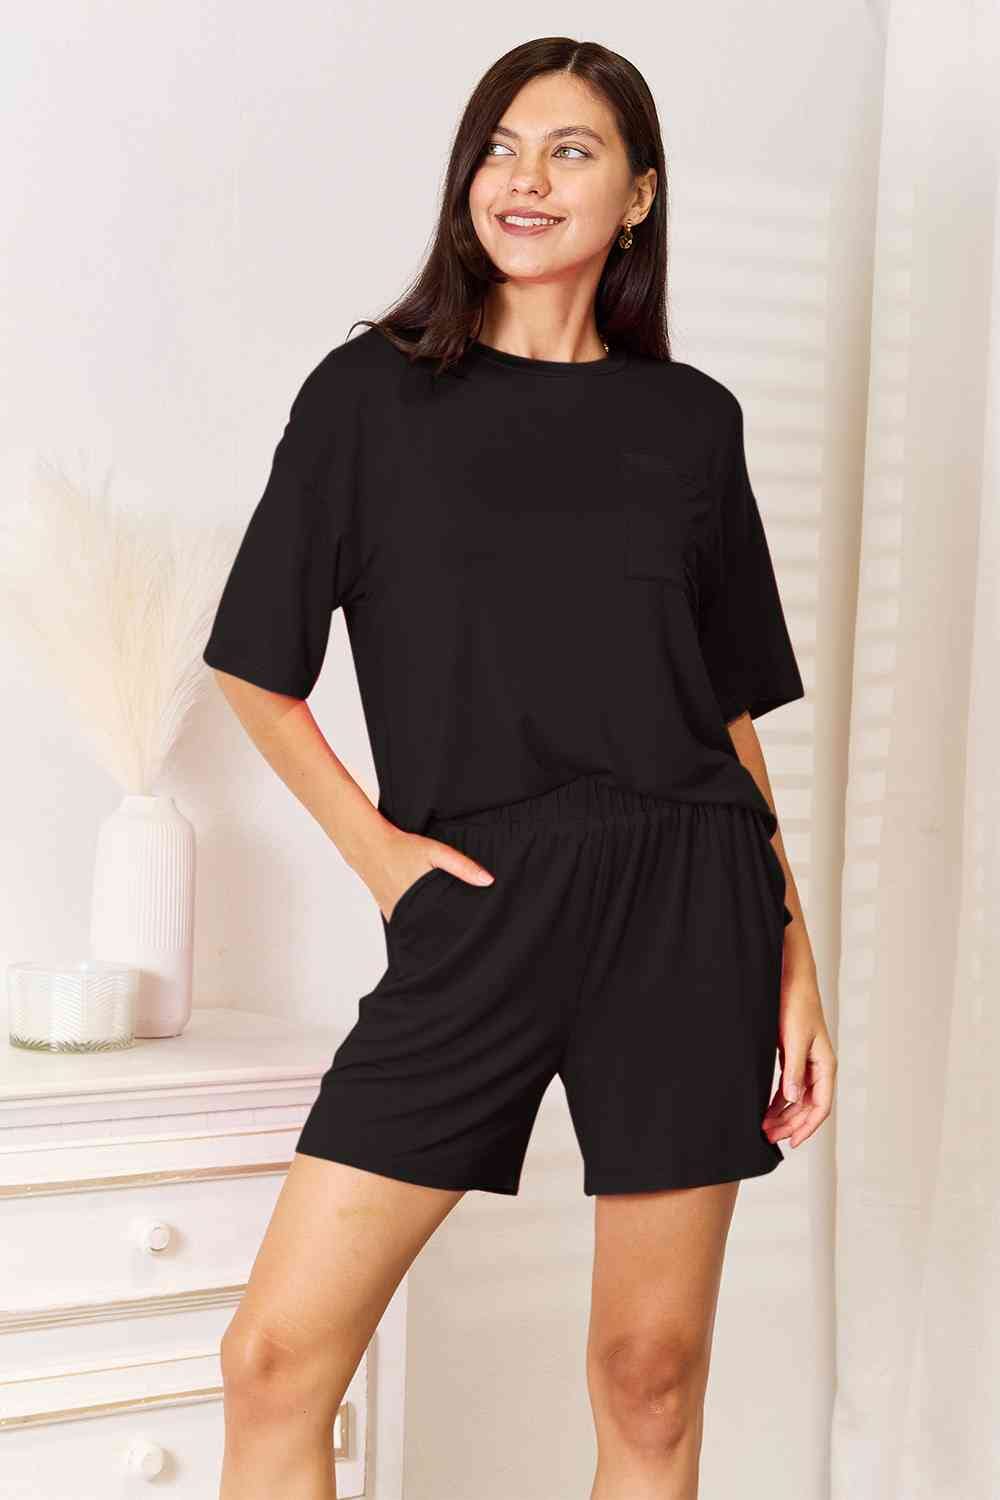 Basic Bae 2 piece Soft Rayon Stretchy Half Sleeve Top and Shorts Loungewear Set Sleepwear & Loungewear jehouze Black S 